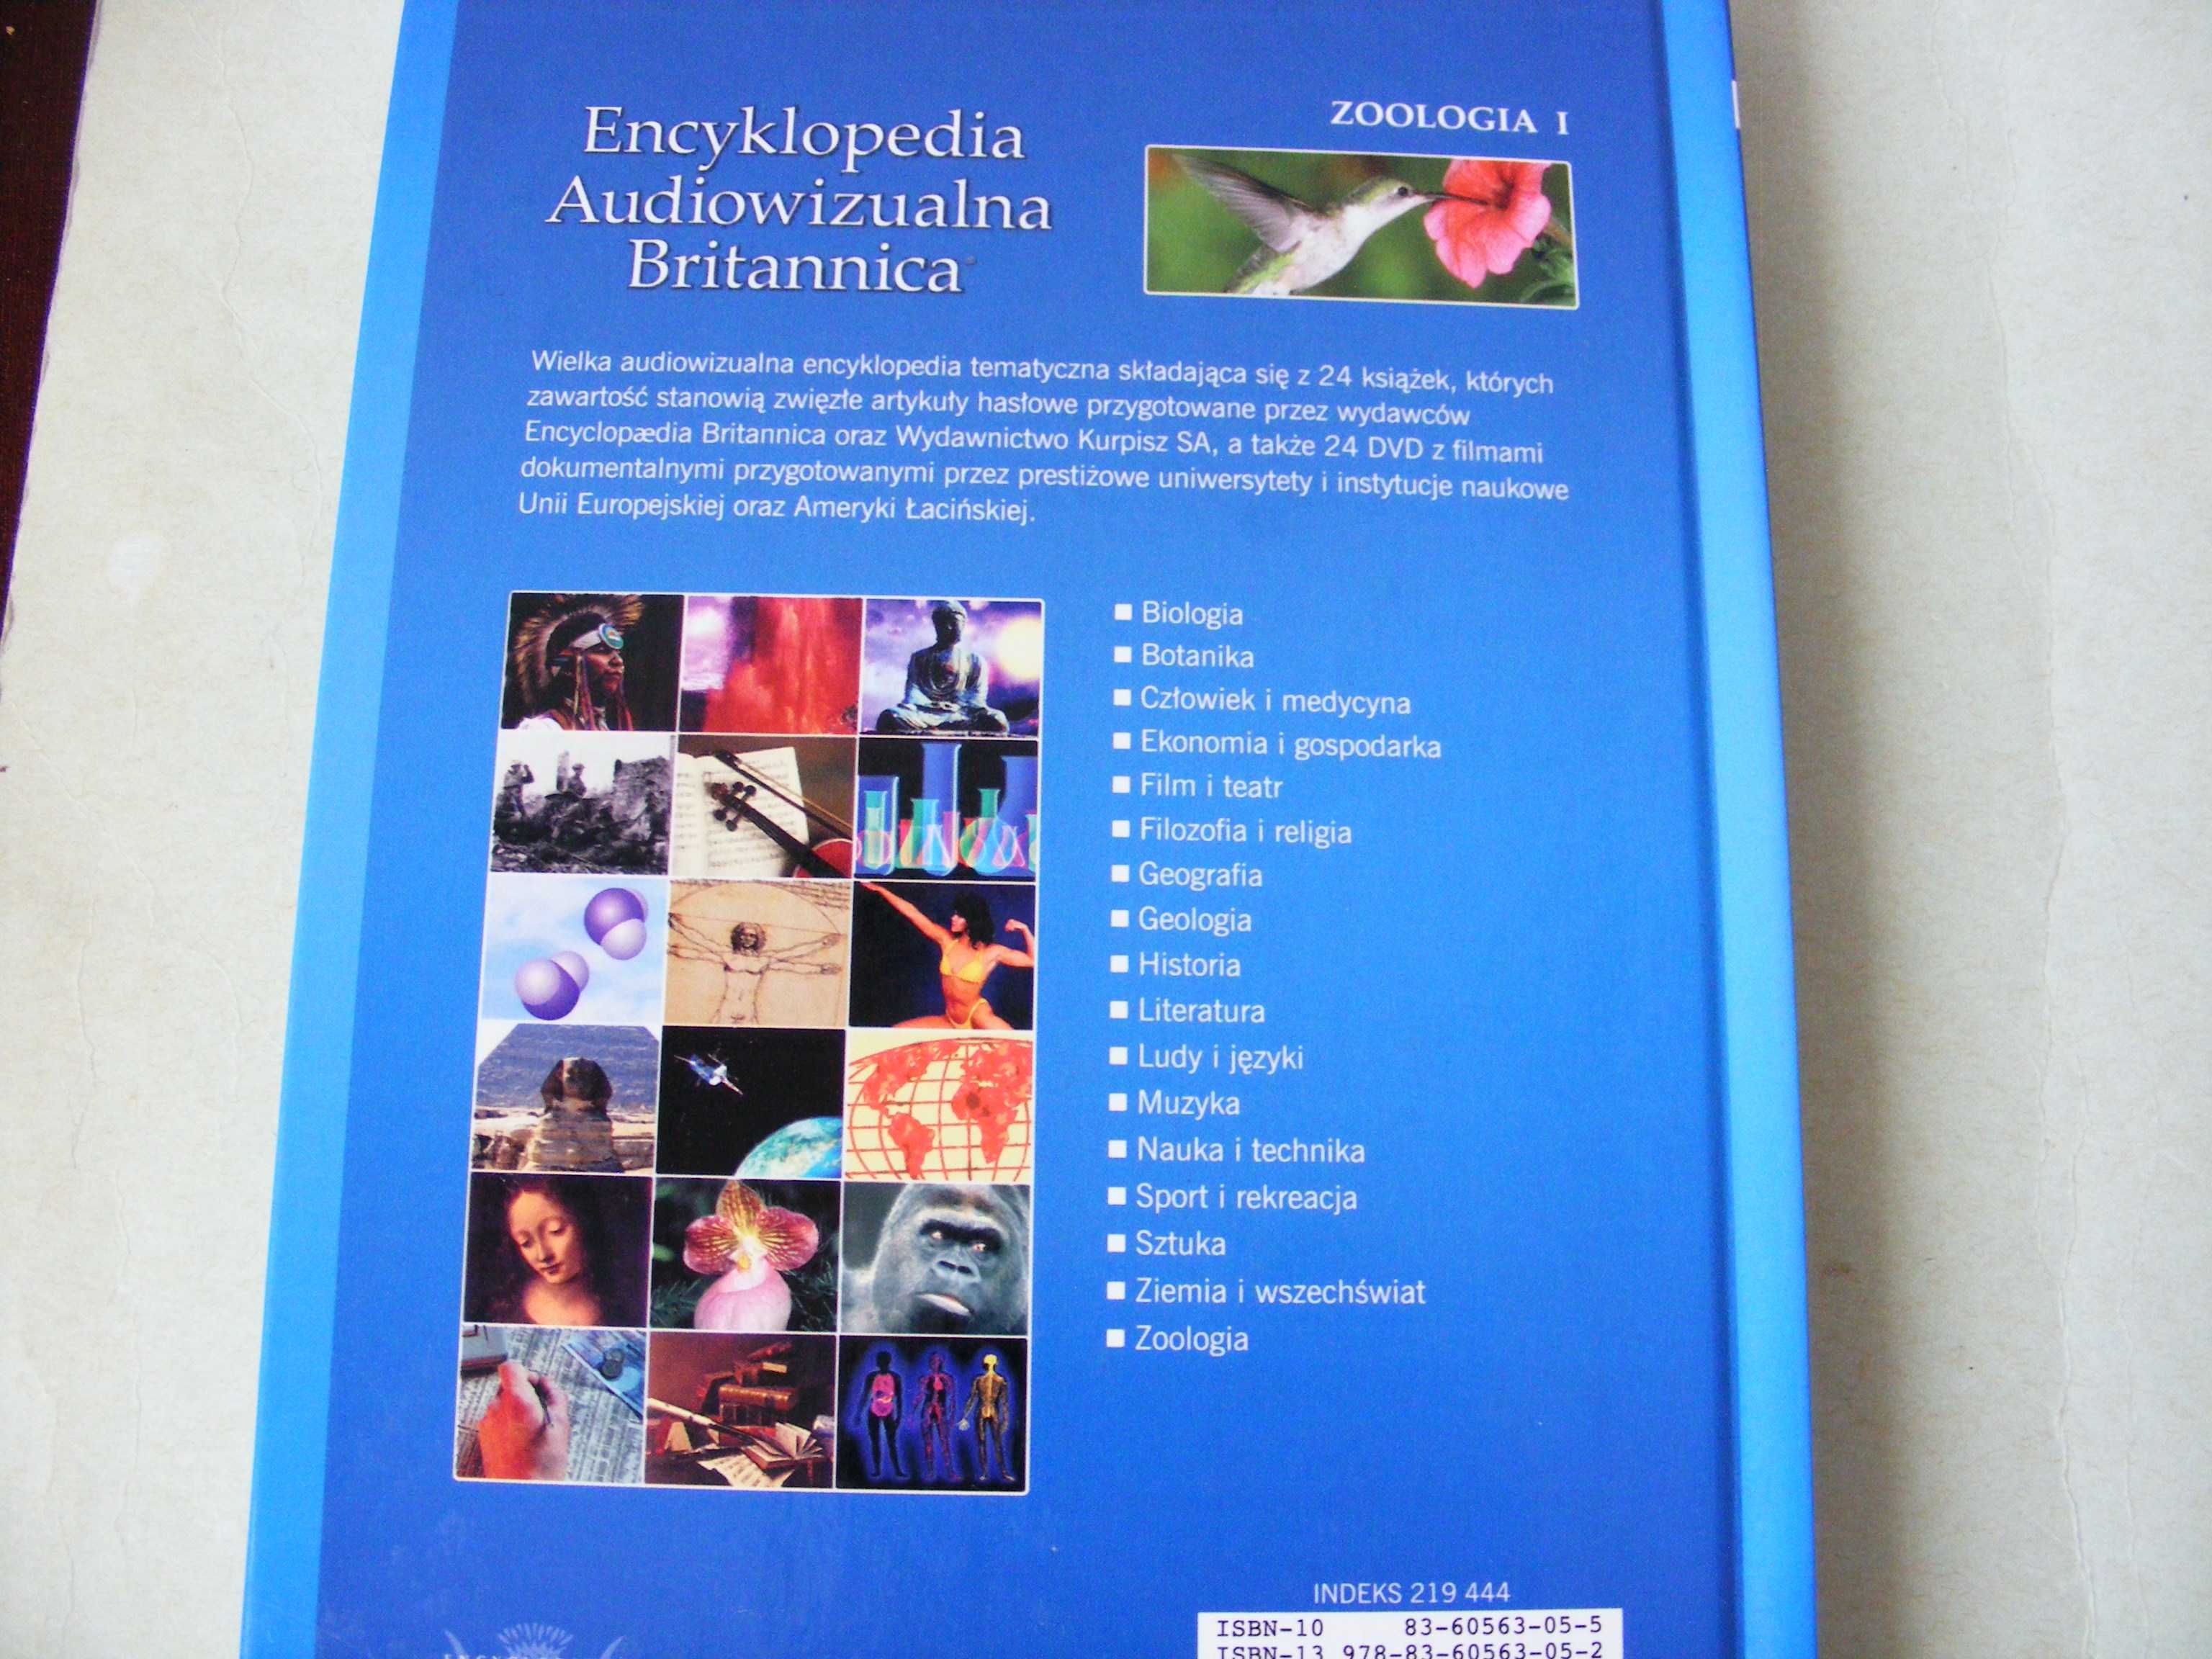 Popularna encyklopedia  Encyklopedia Gazety Encyklopedia Audiowizualna